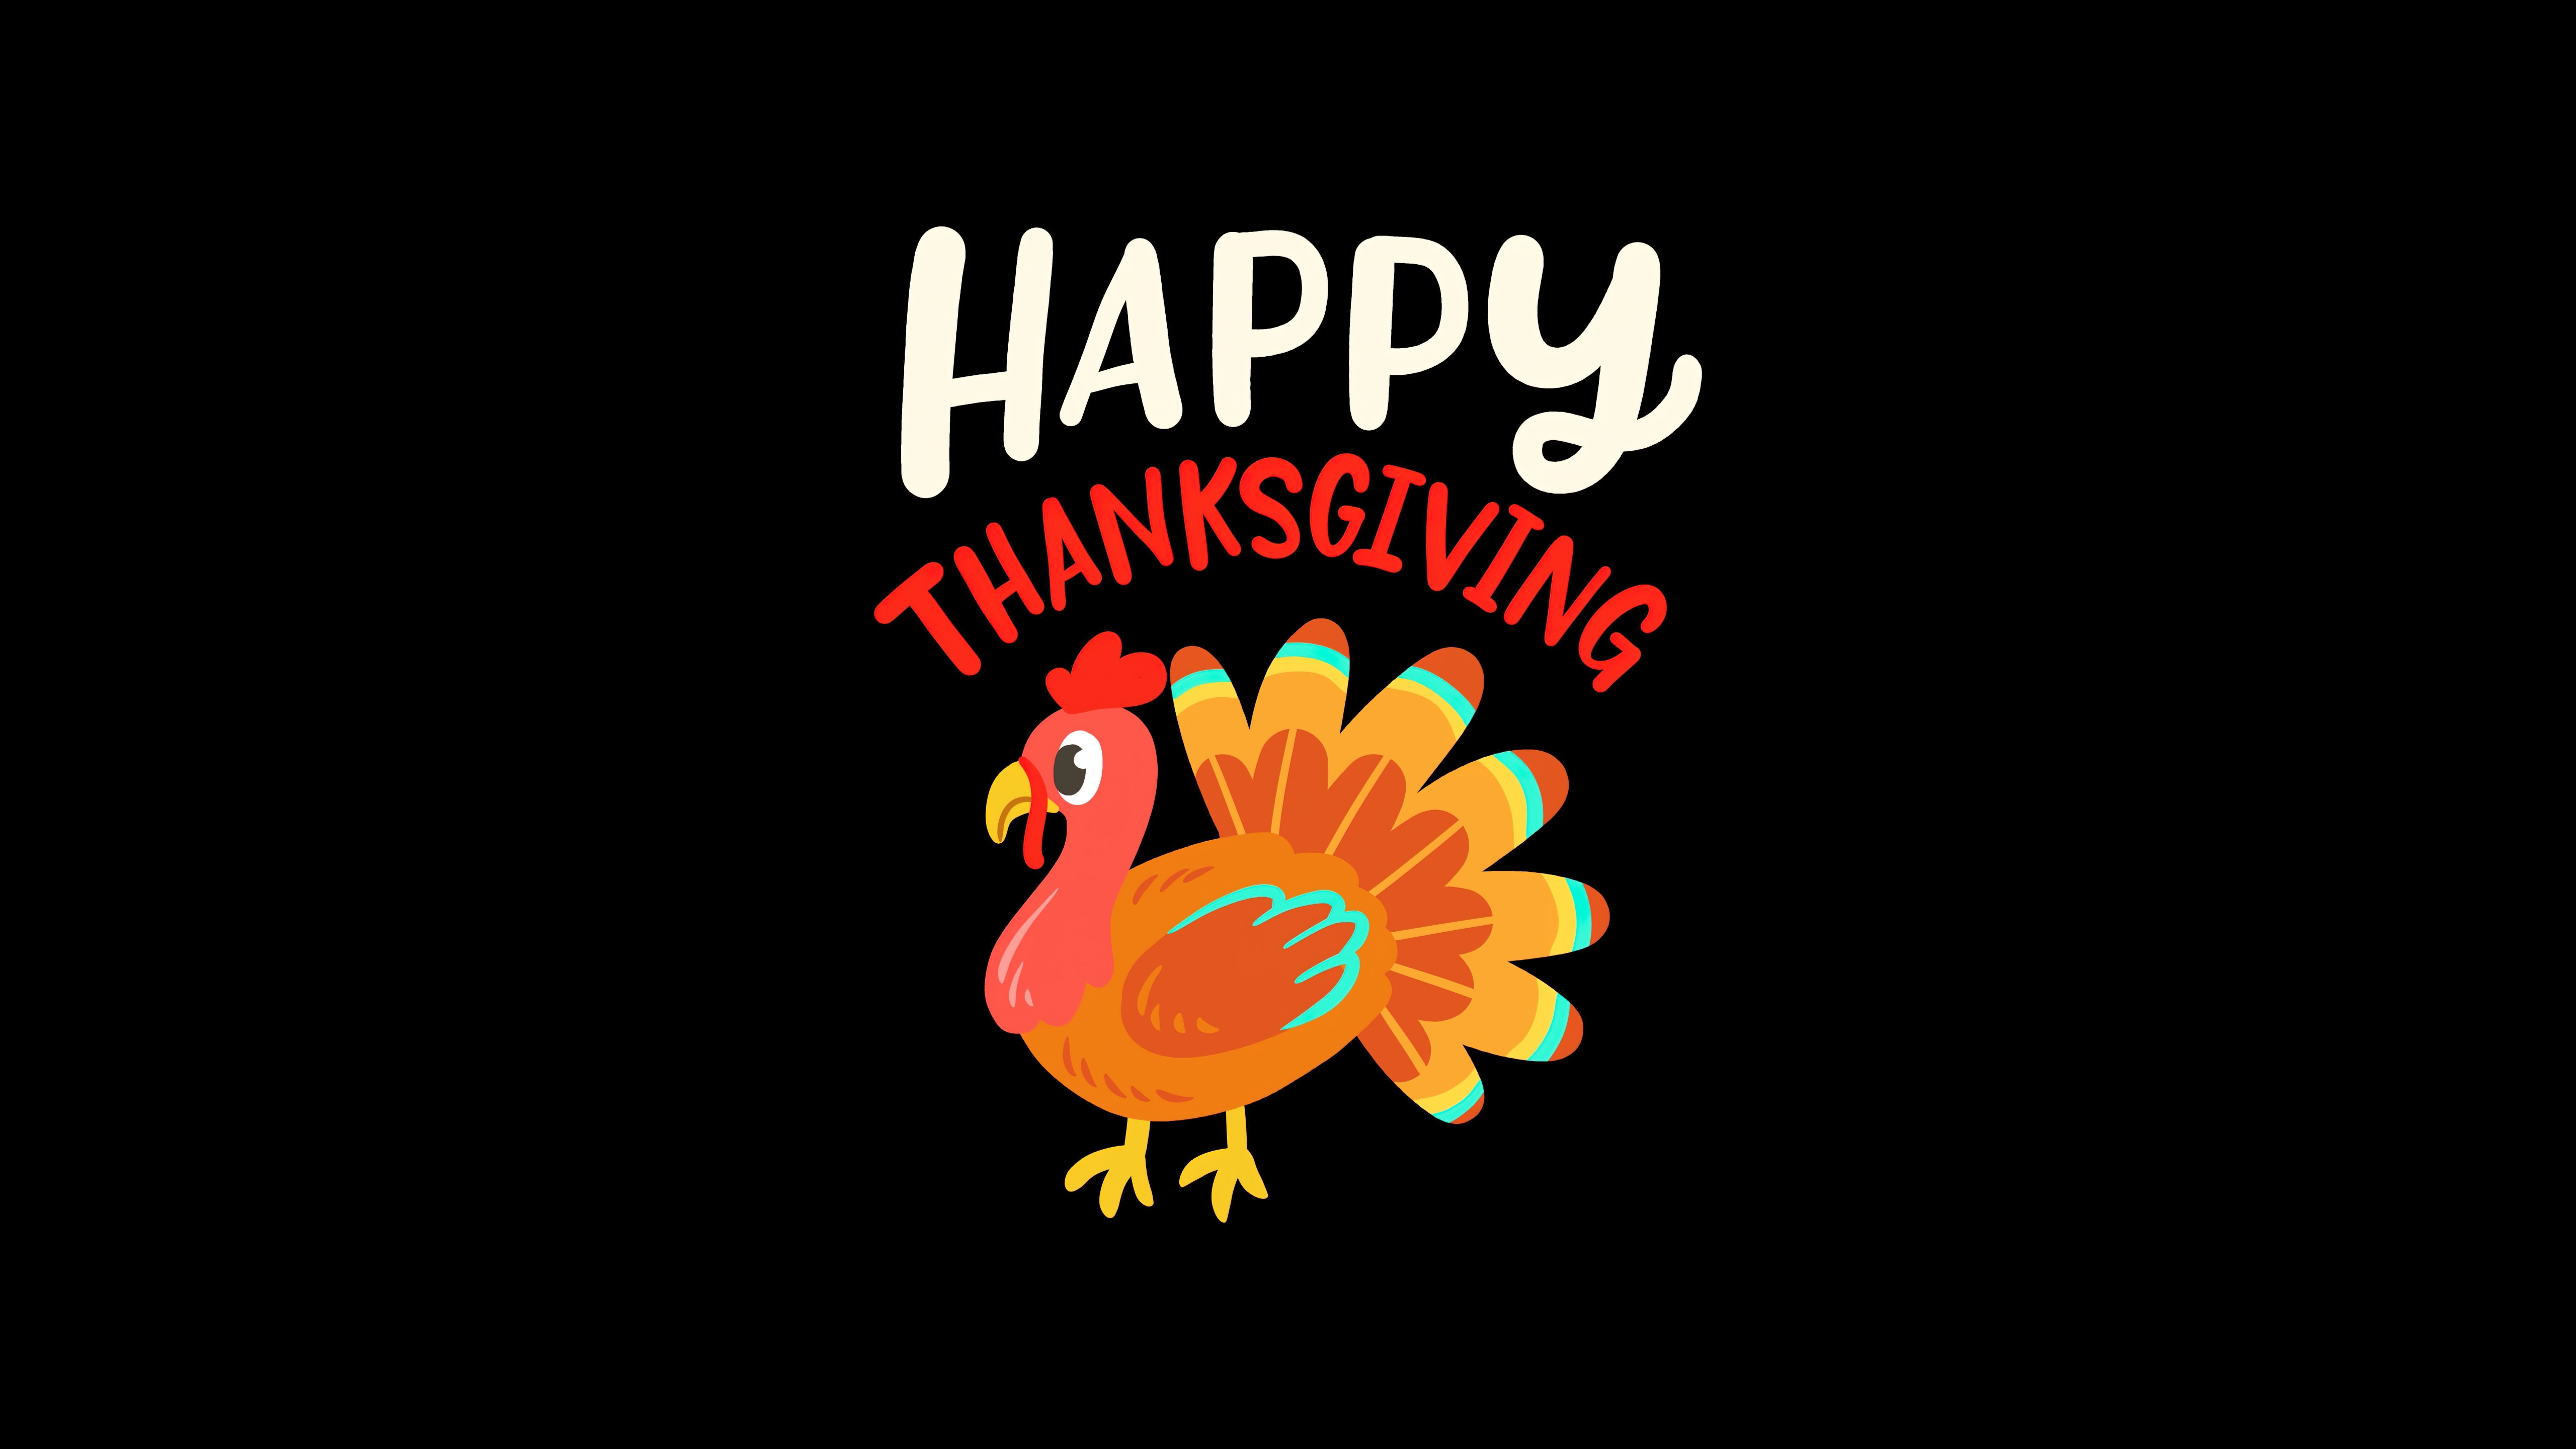 HD wallpaper, Black Background, Thanksgiving Day, Amoled, 5K, Happy Thanksgiving